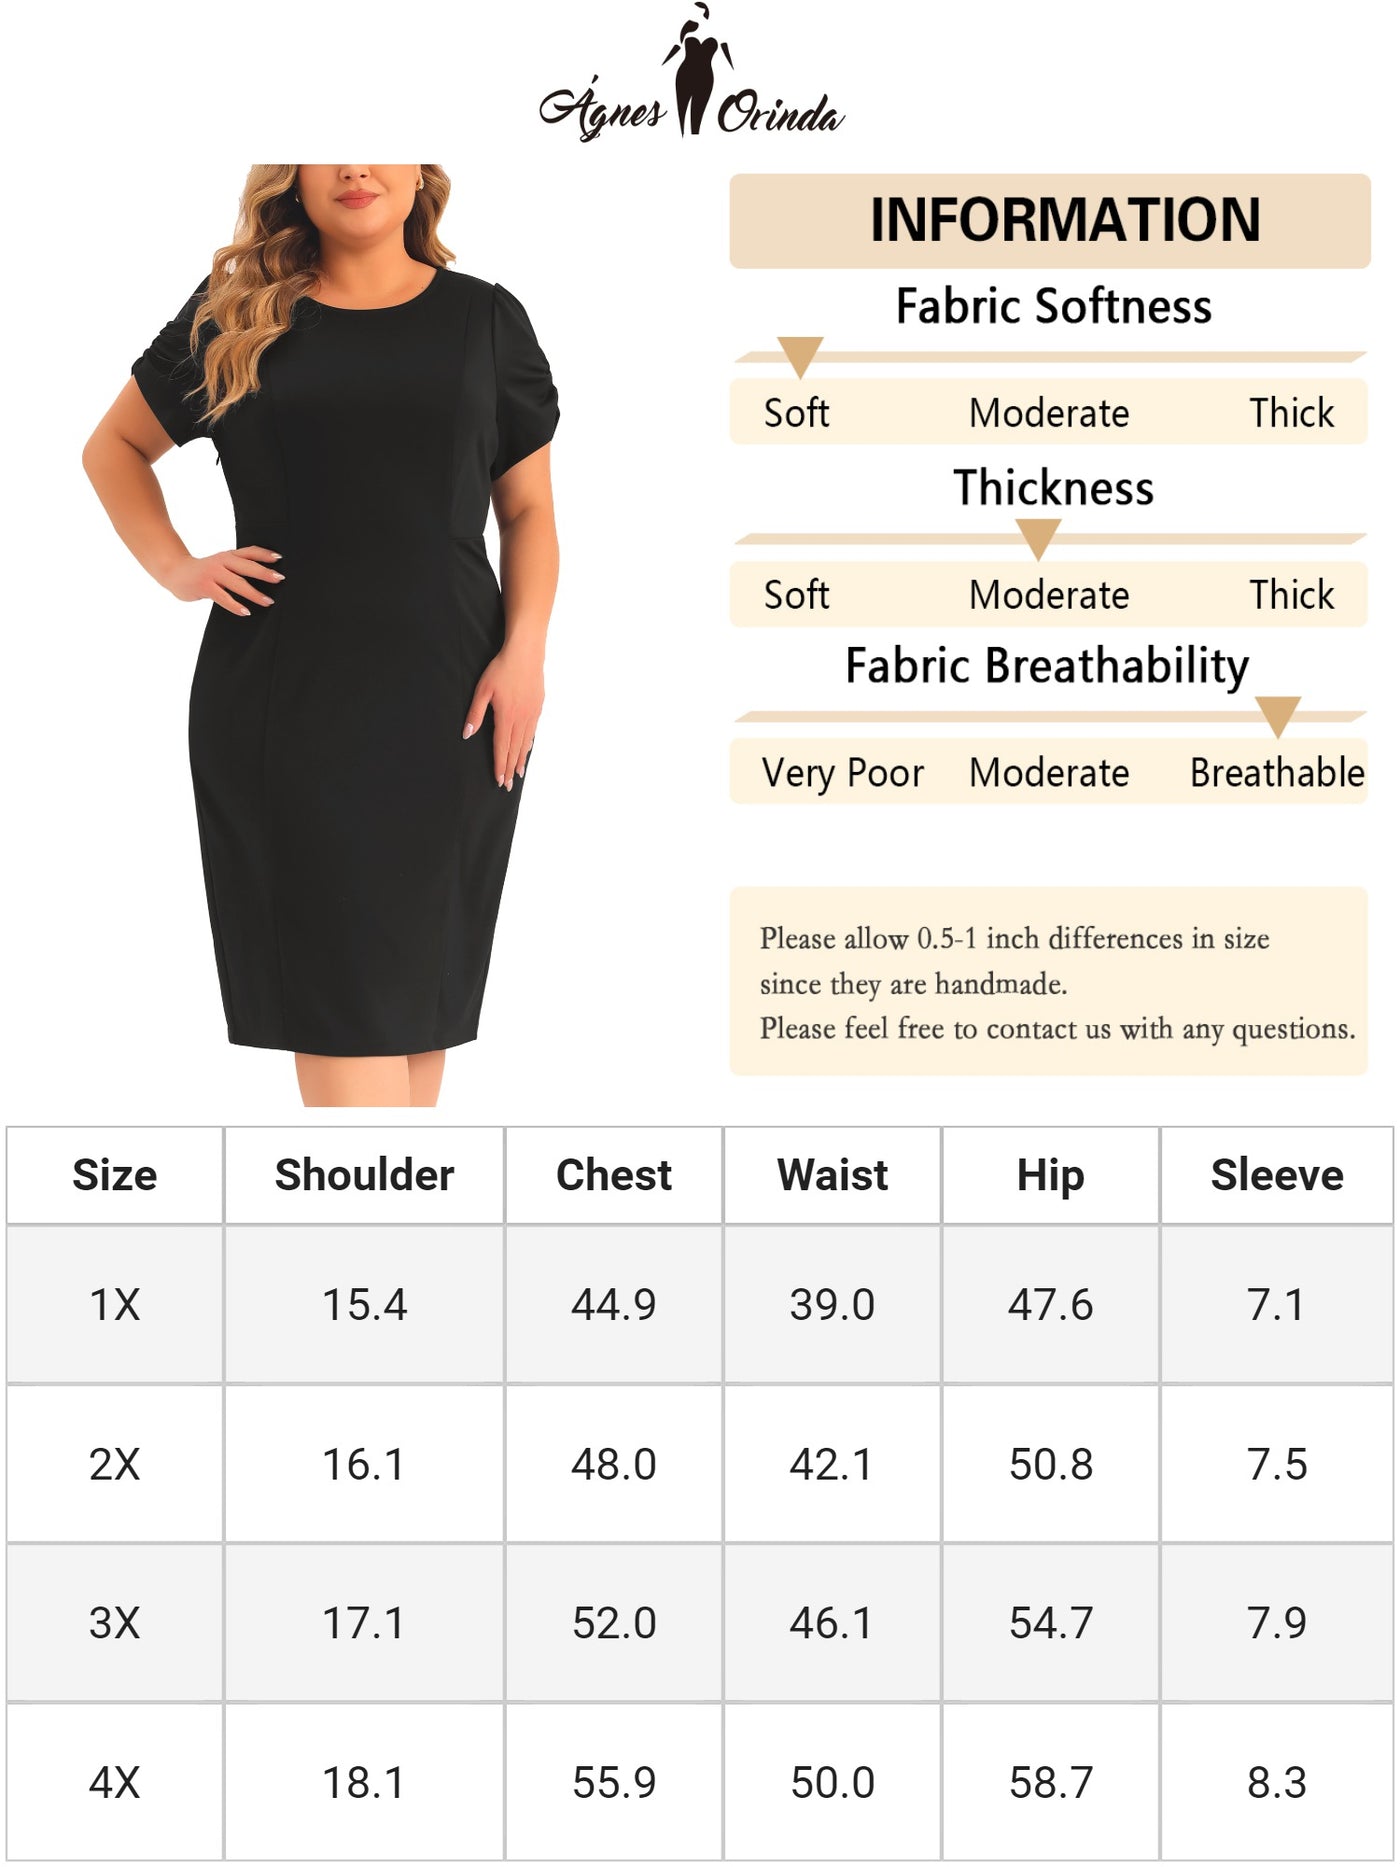 Bublédon Plus Size Short Sleeve Above the Knee Sheath Office Wear to Work Dress